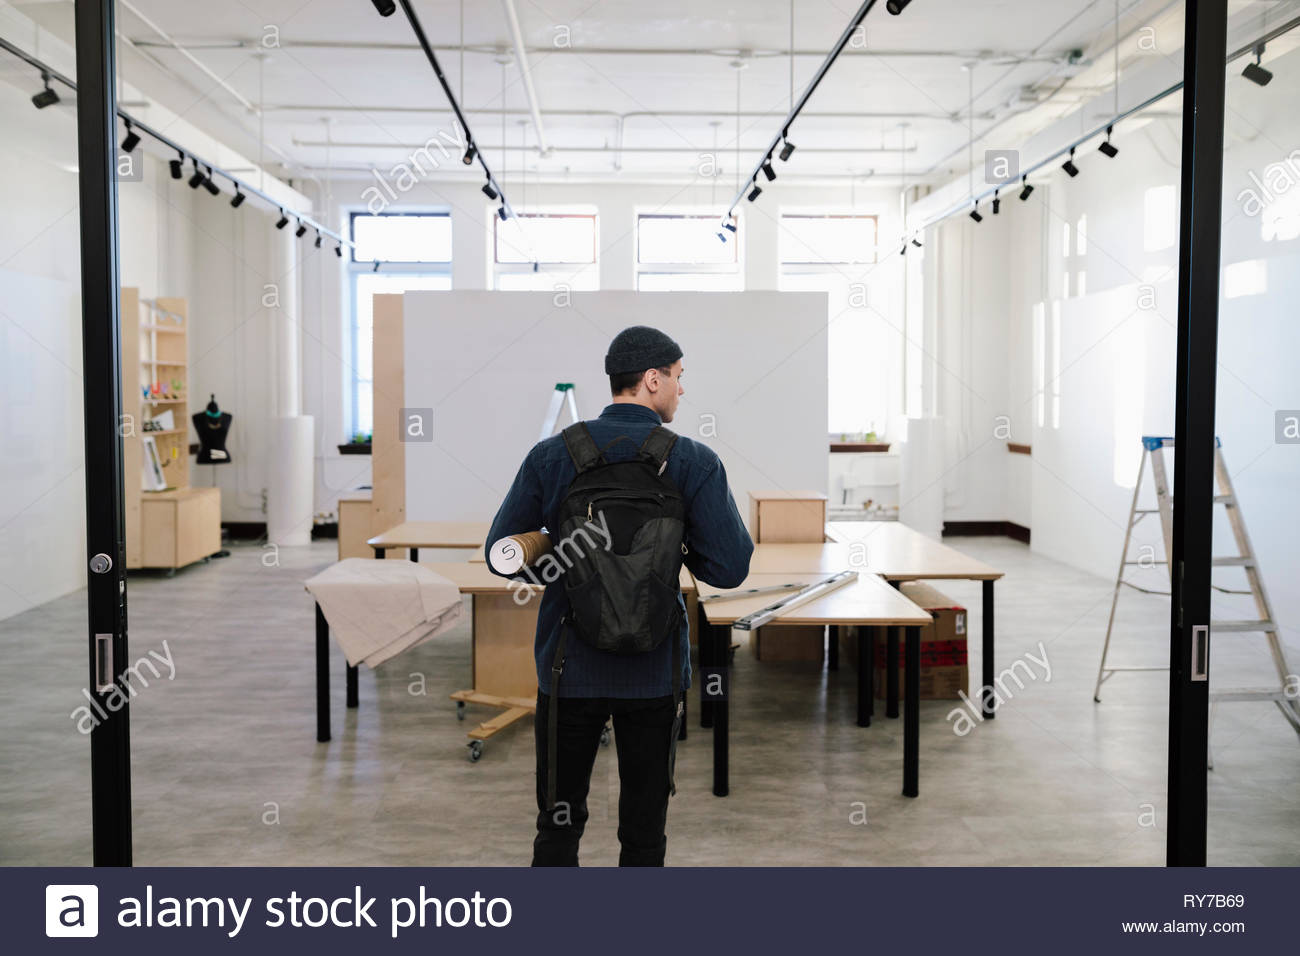 Male artist entering art gallery Stock Photo